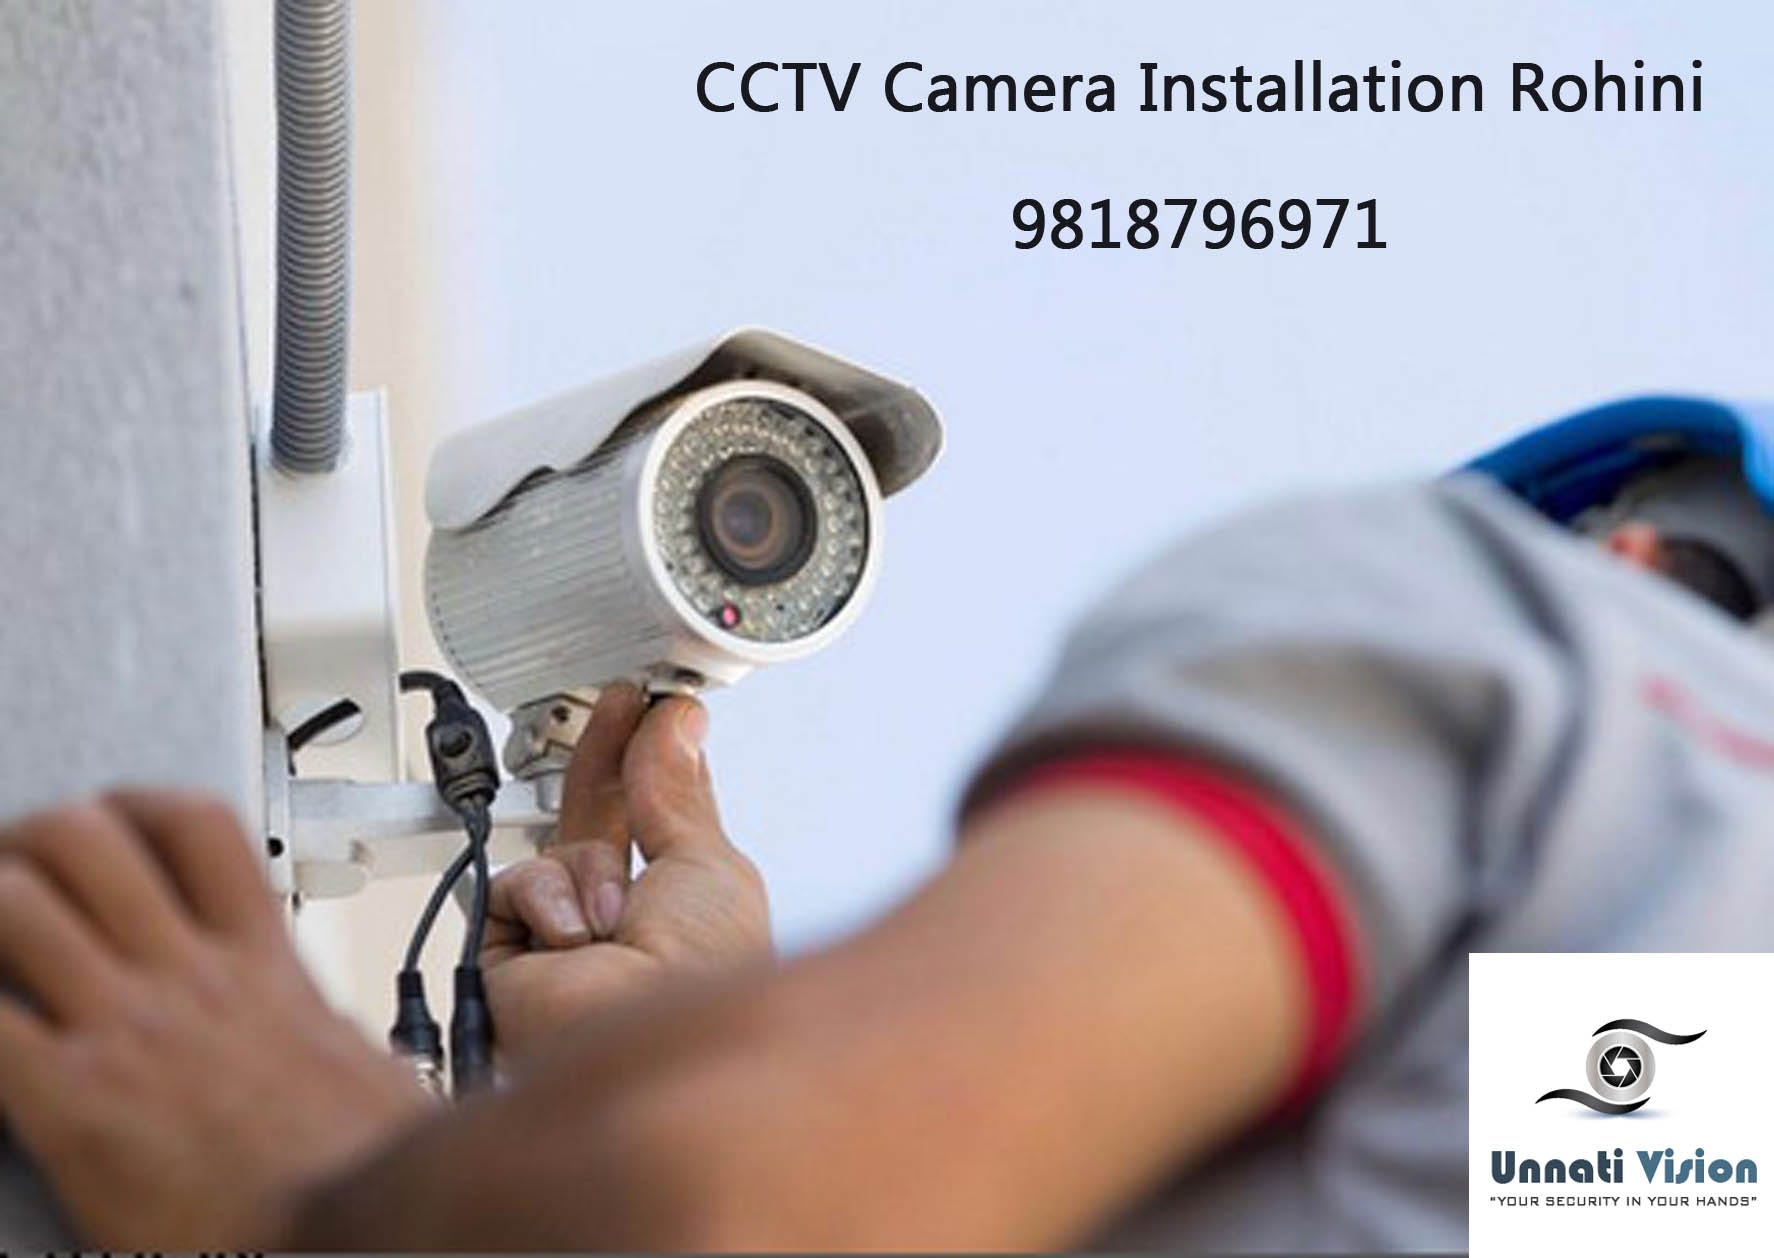 CCTV Camera Installation Rohini. We at 